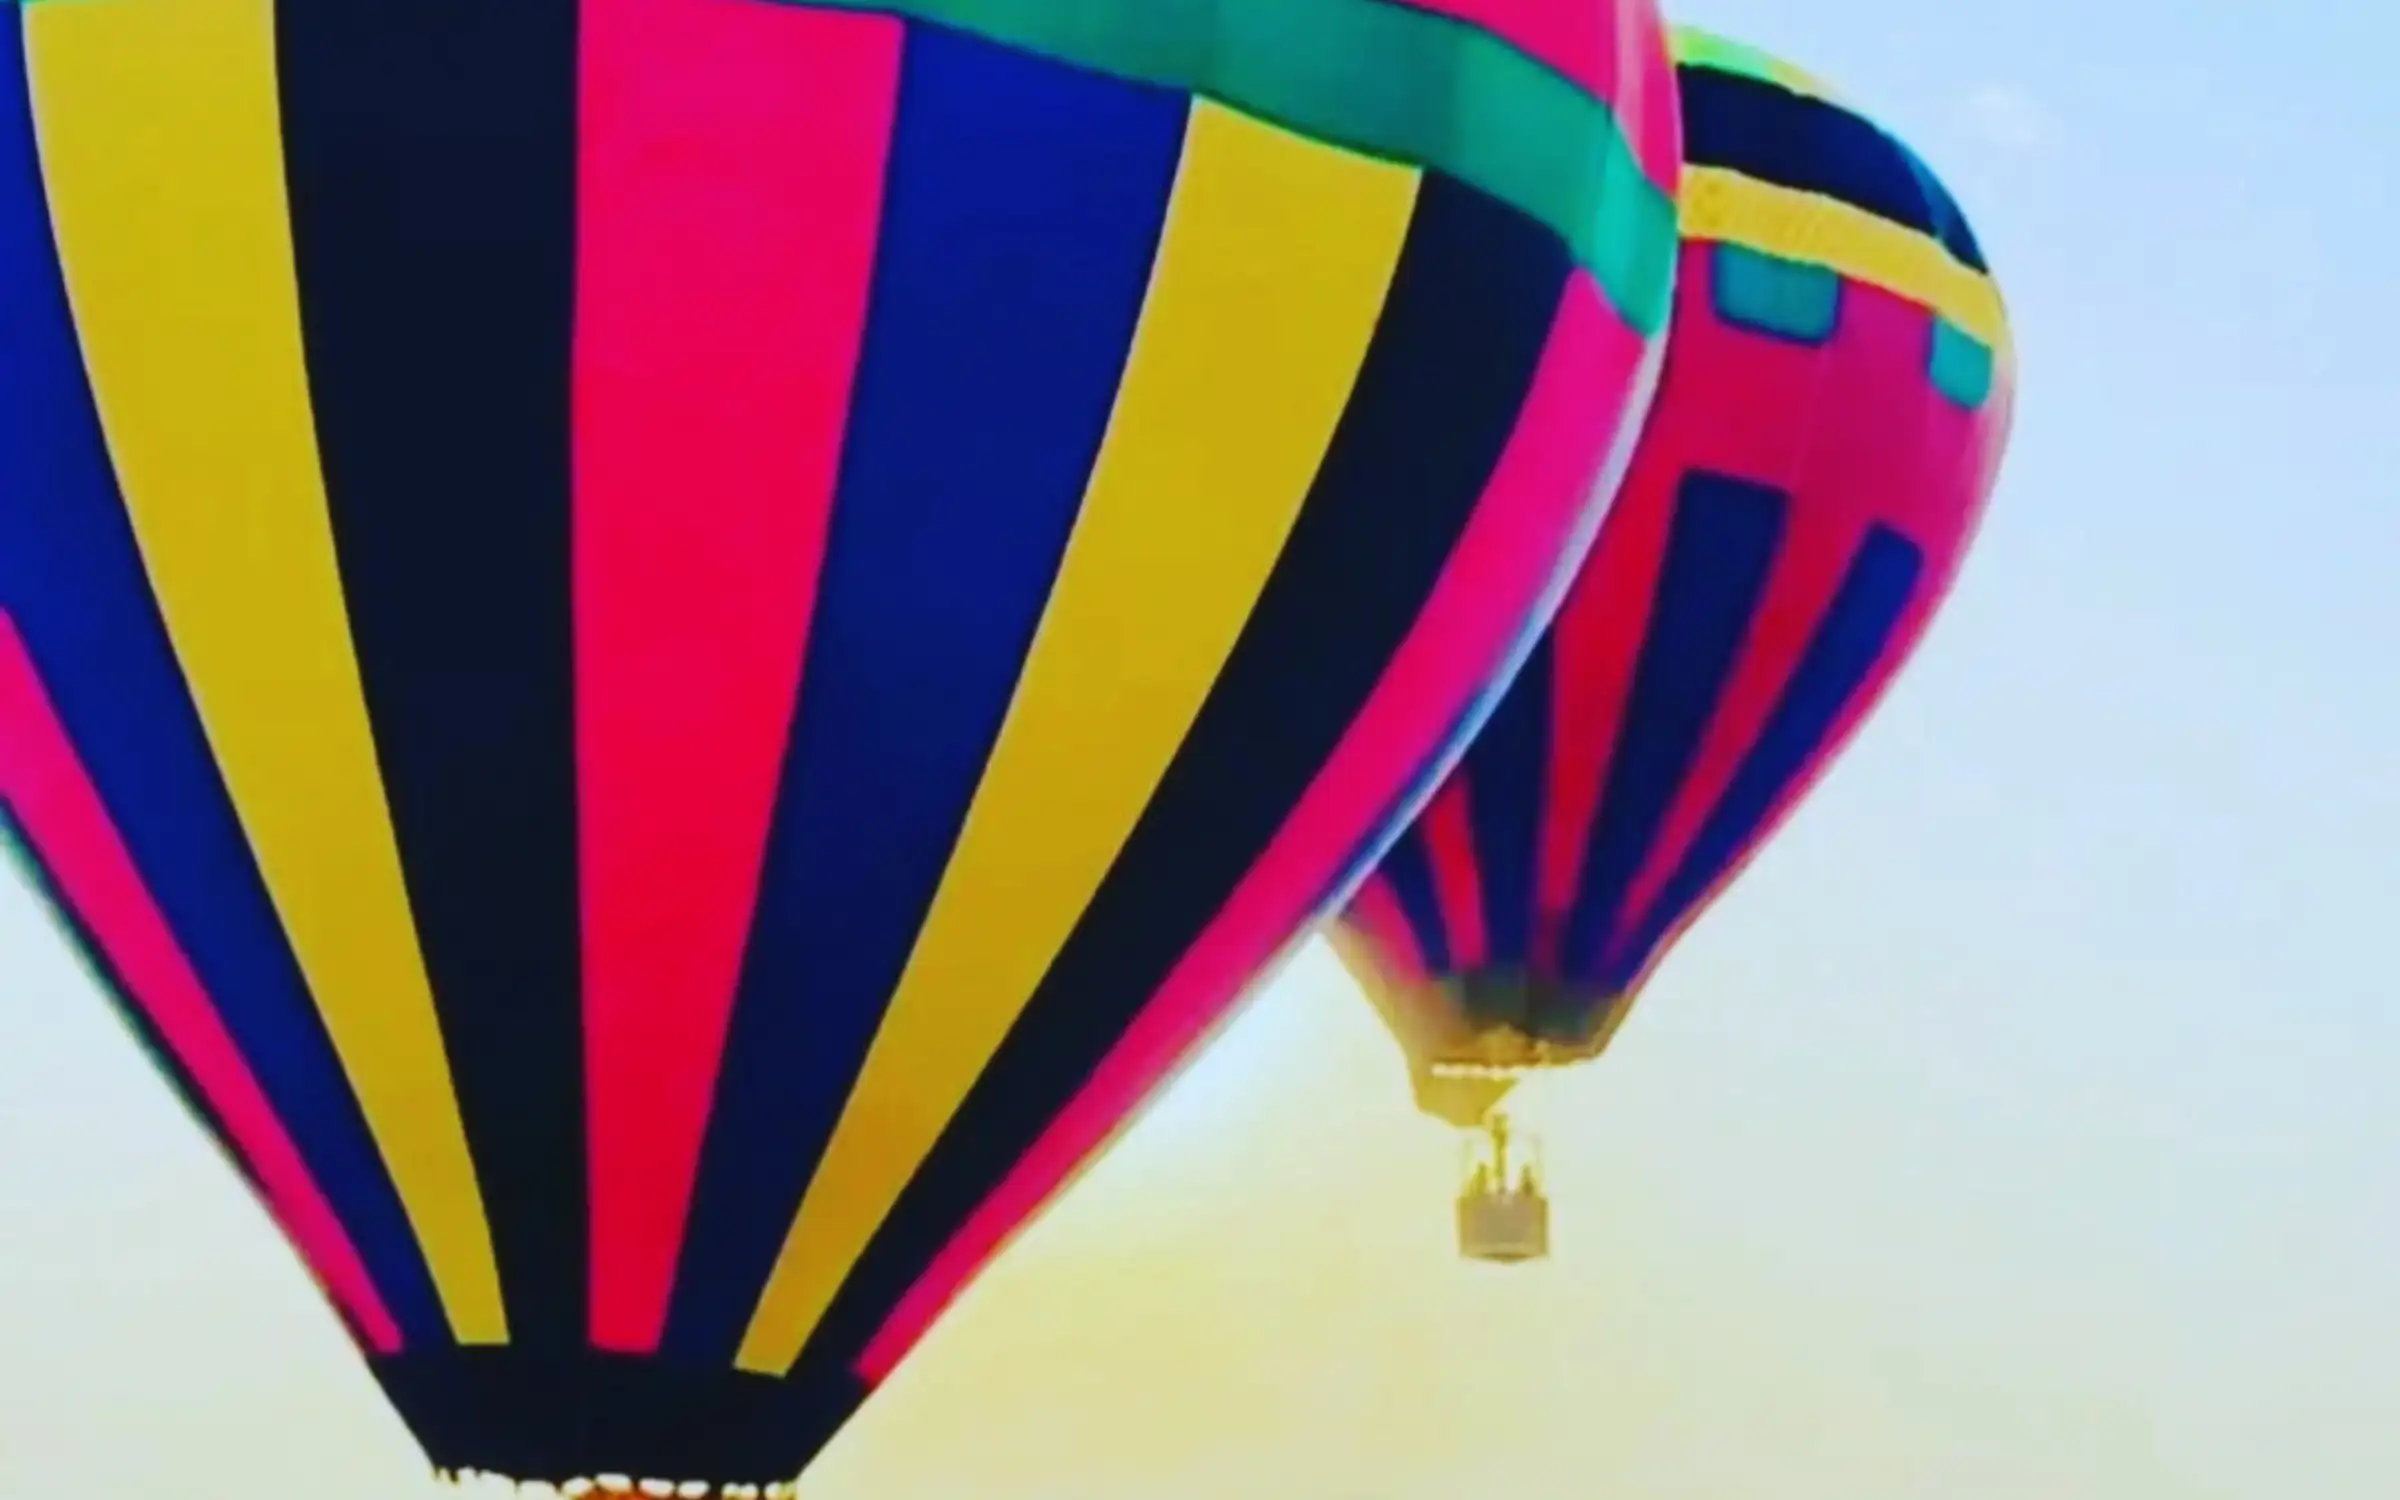 Hot Air Balloon in Jim Corbett Nainital